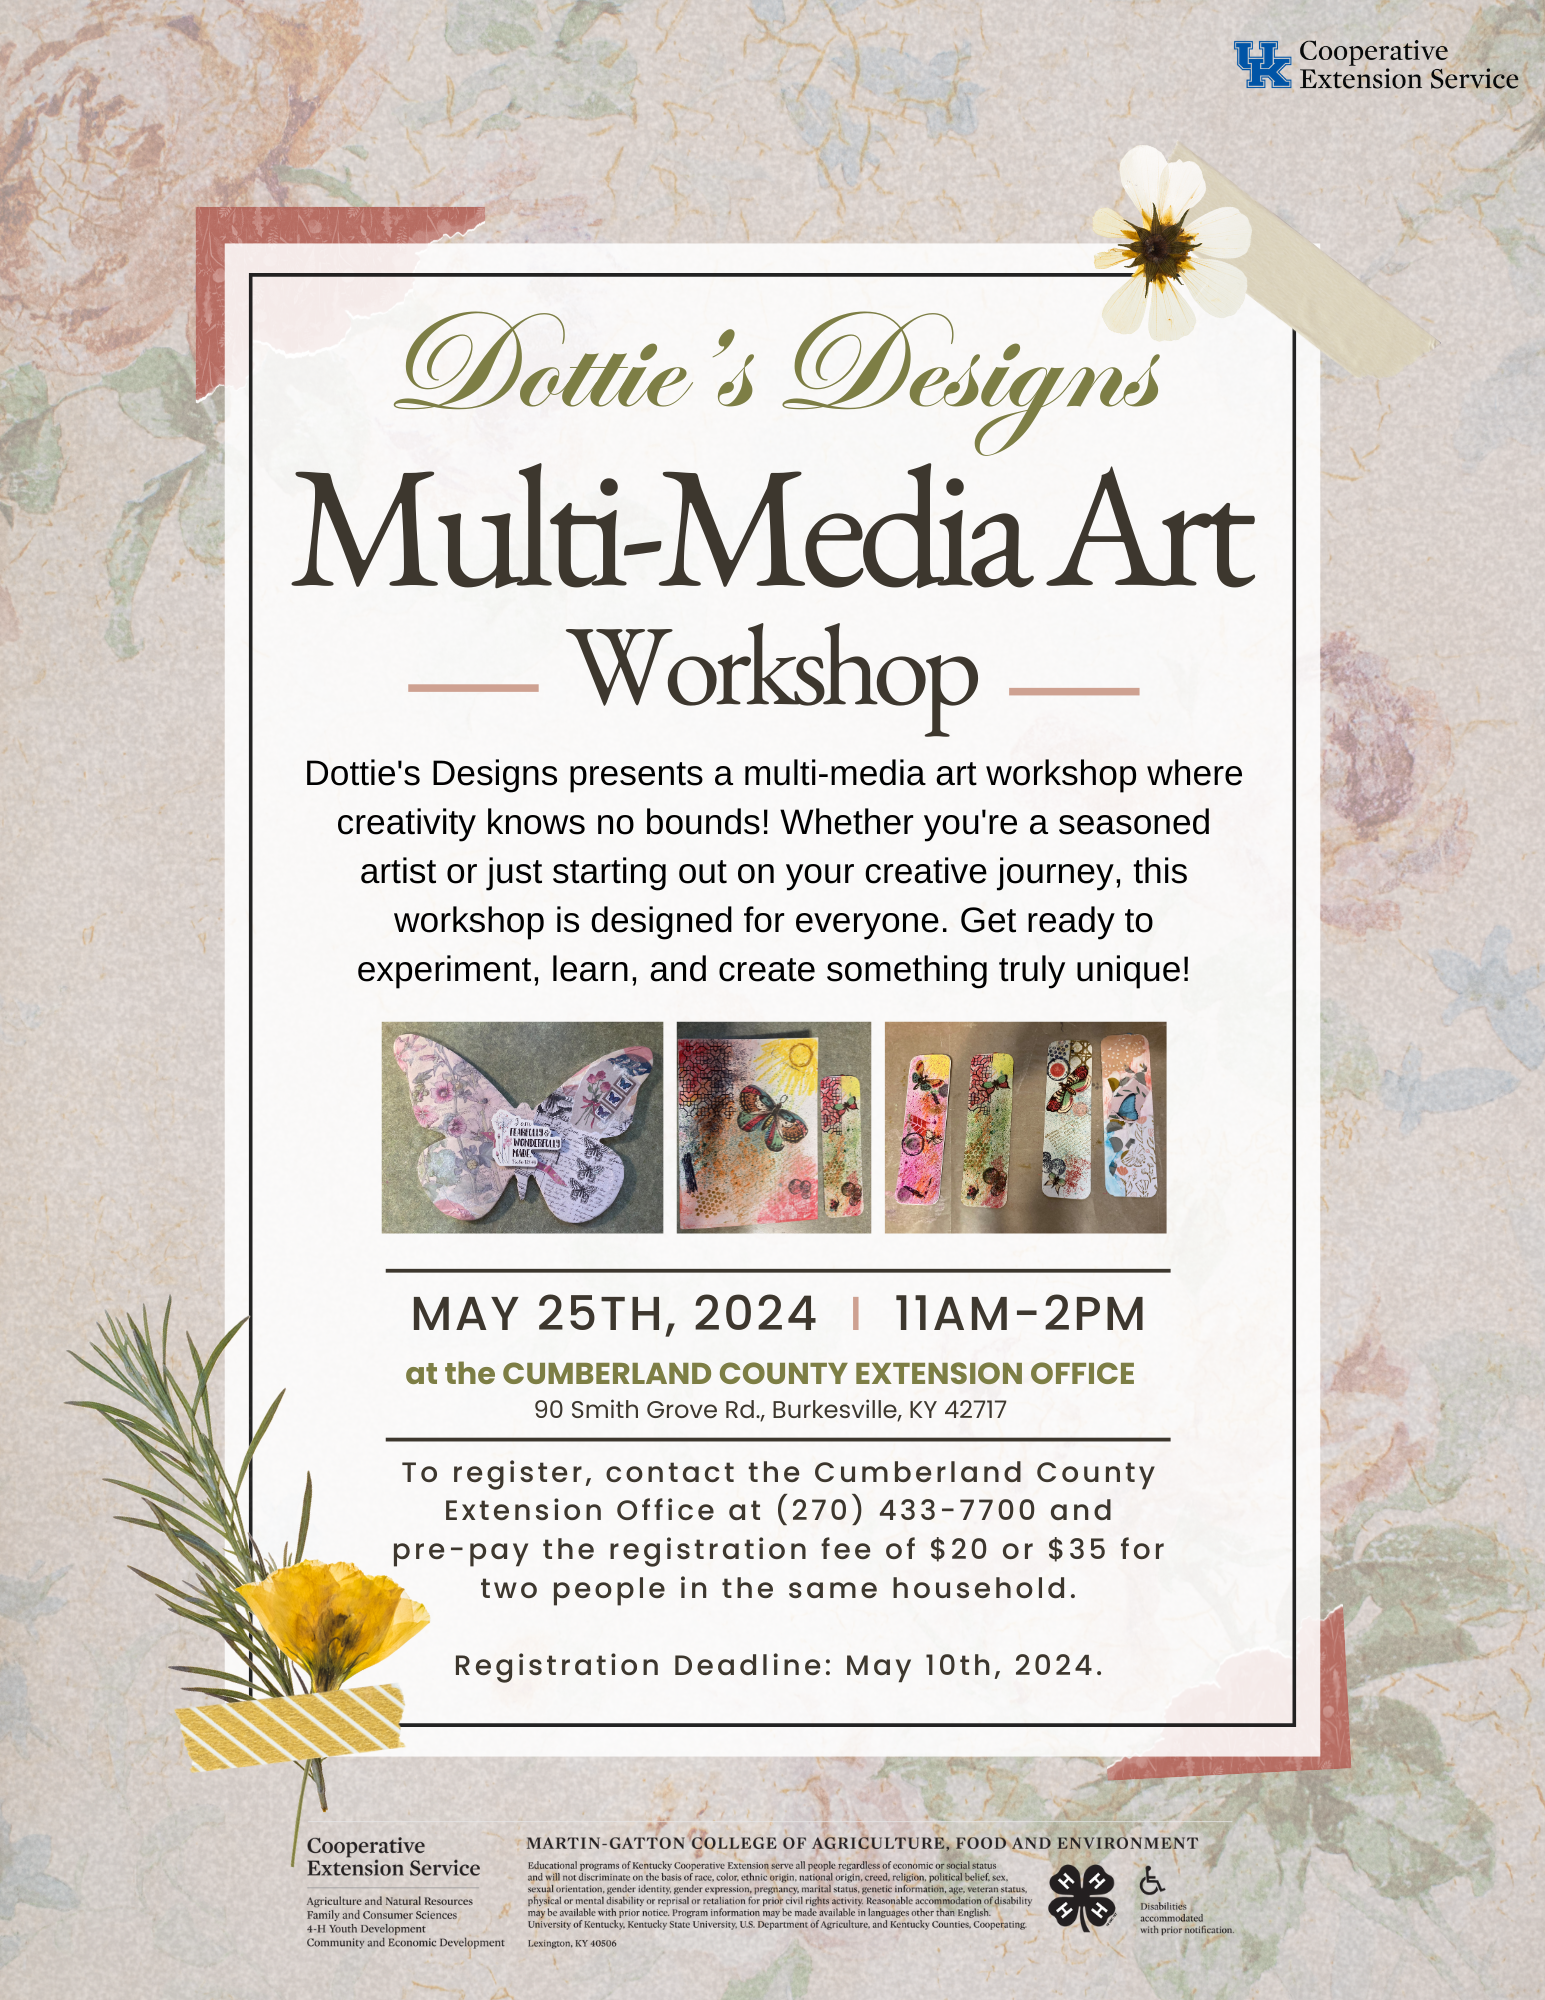 Dottie's Designs Multi-Media Workshop 